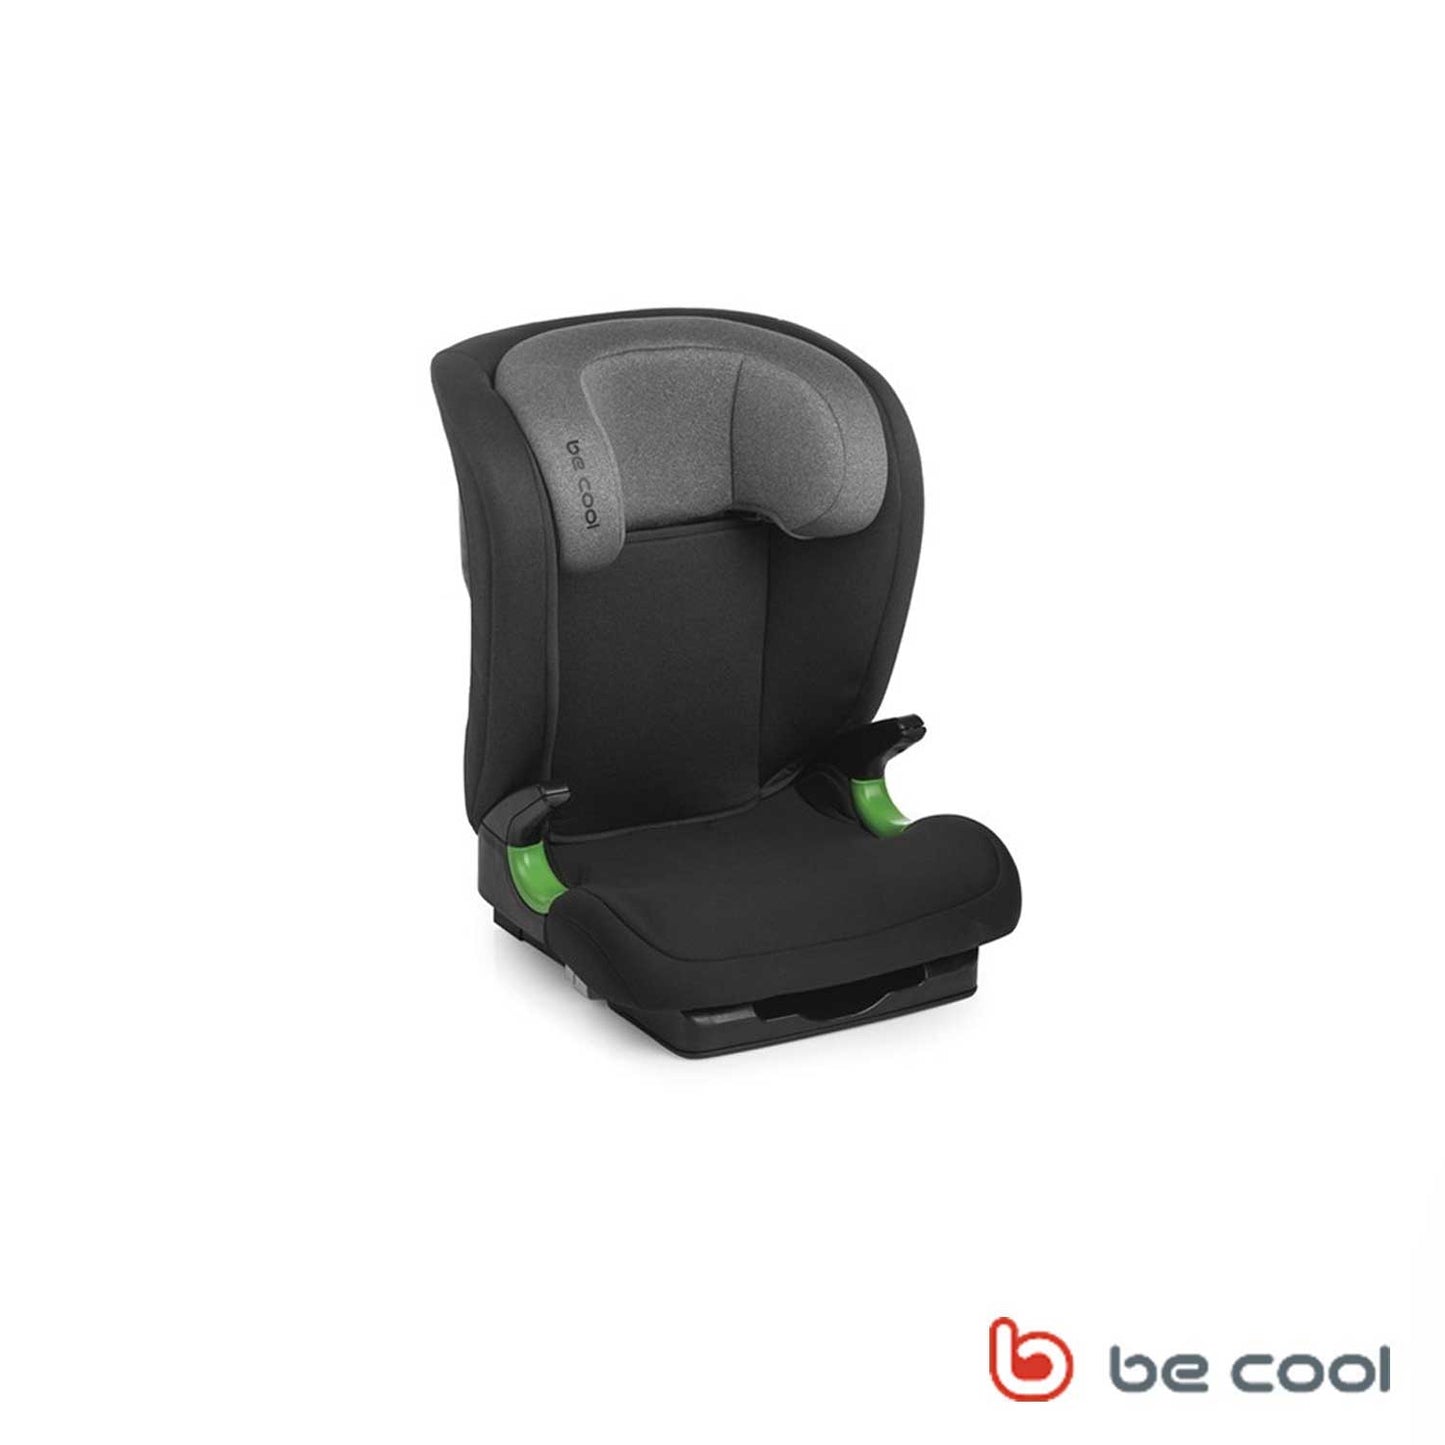 Be Cool - Car seat Venus i sizes 100-150 cm ECE R129